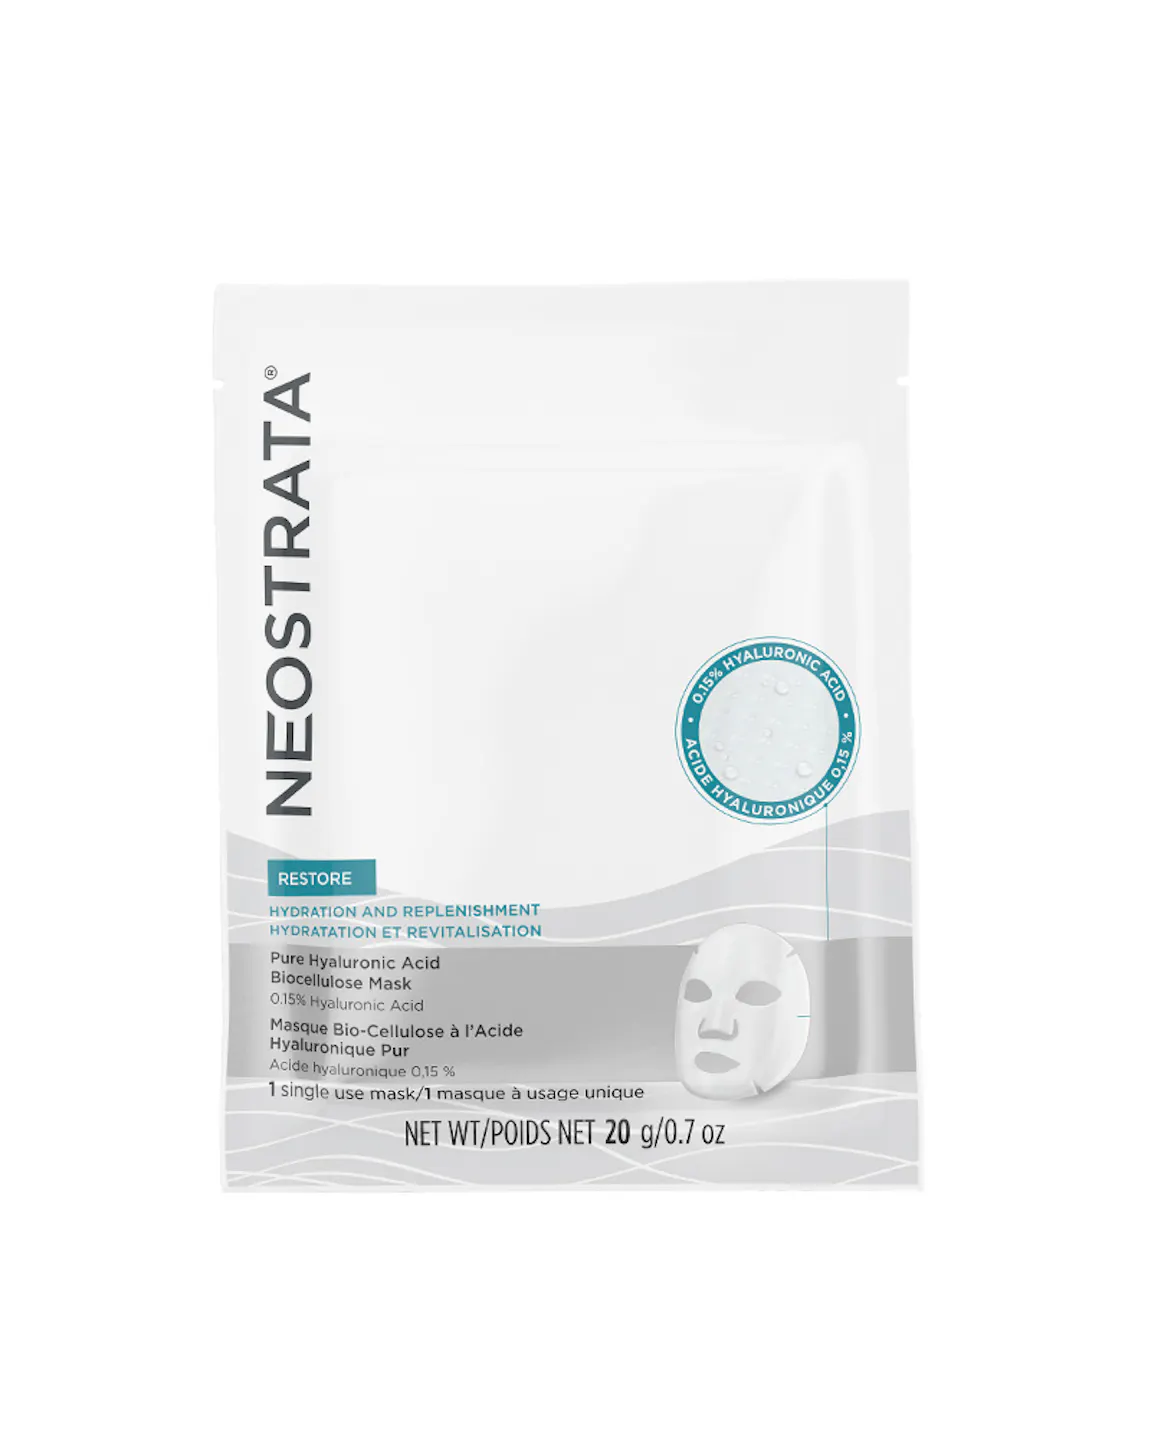 NeoStrata Restore Pure Hyaluronic Acid Biocellulose Mask – 12 Pack